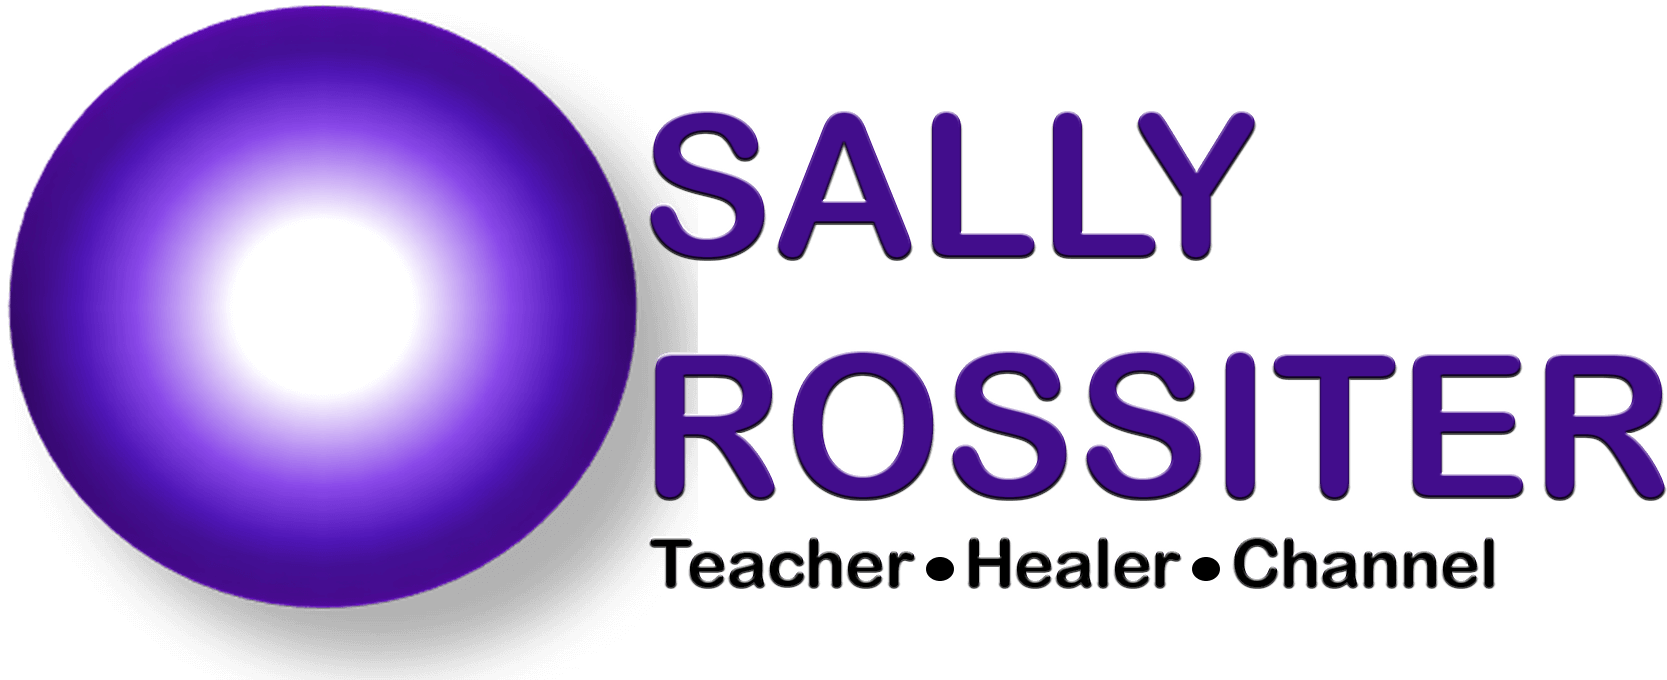 Sally Rossiter logo